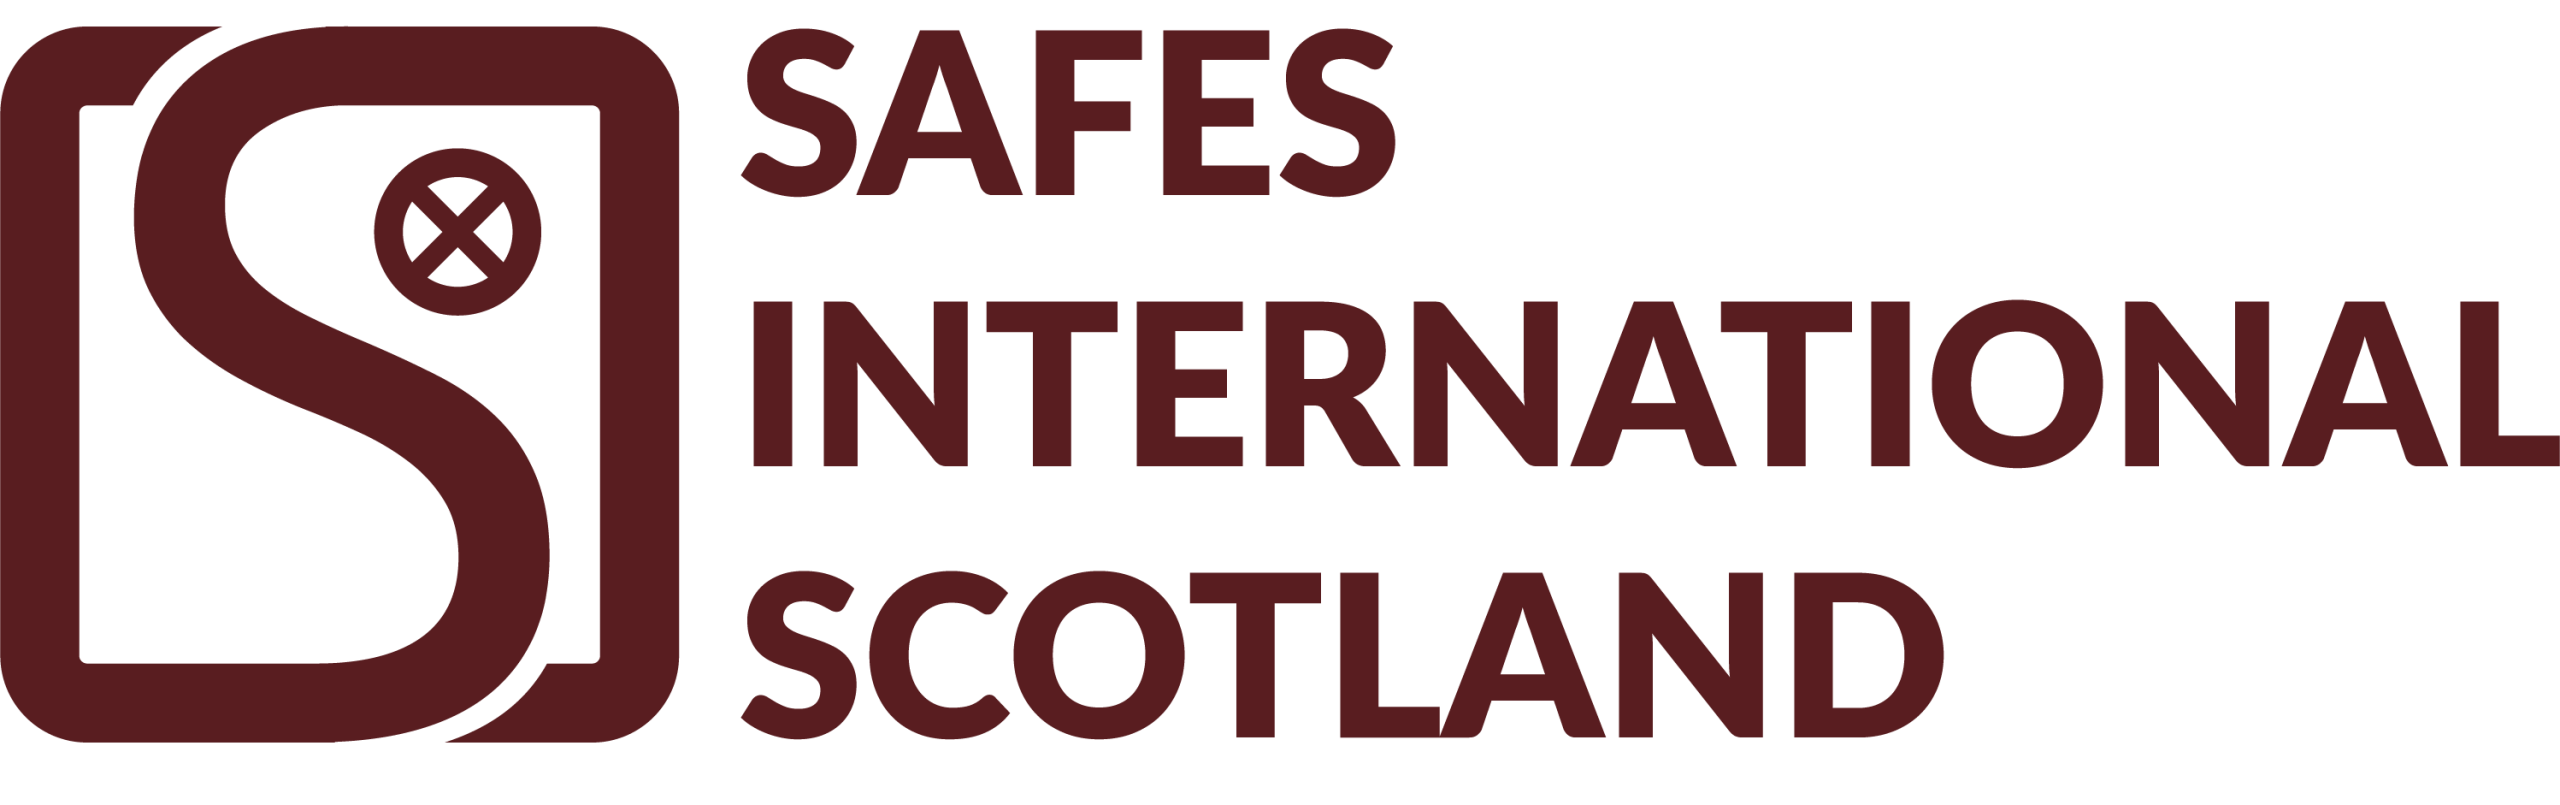 Safes International Scotland